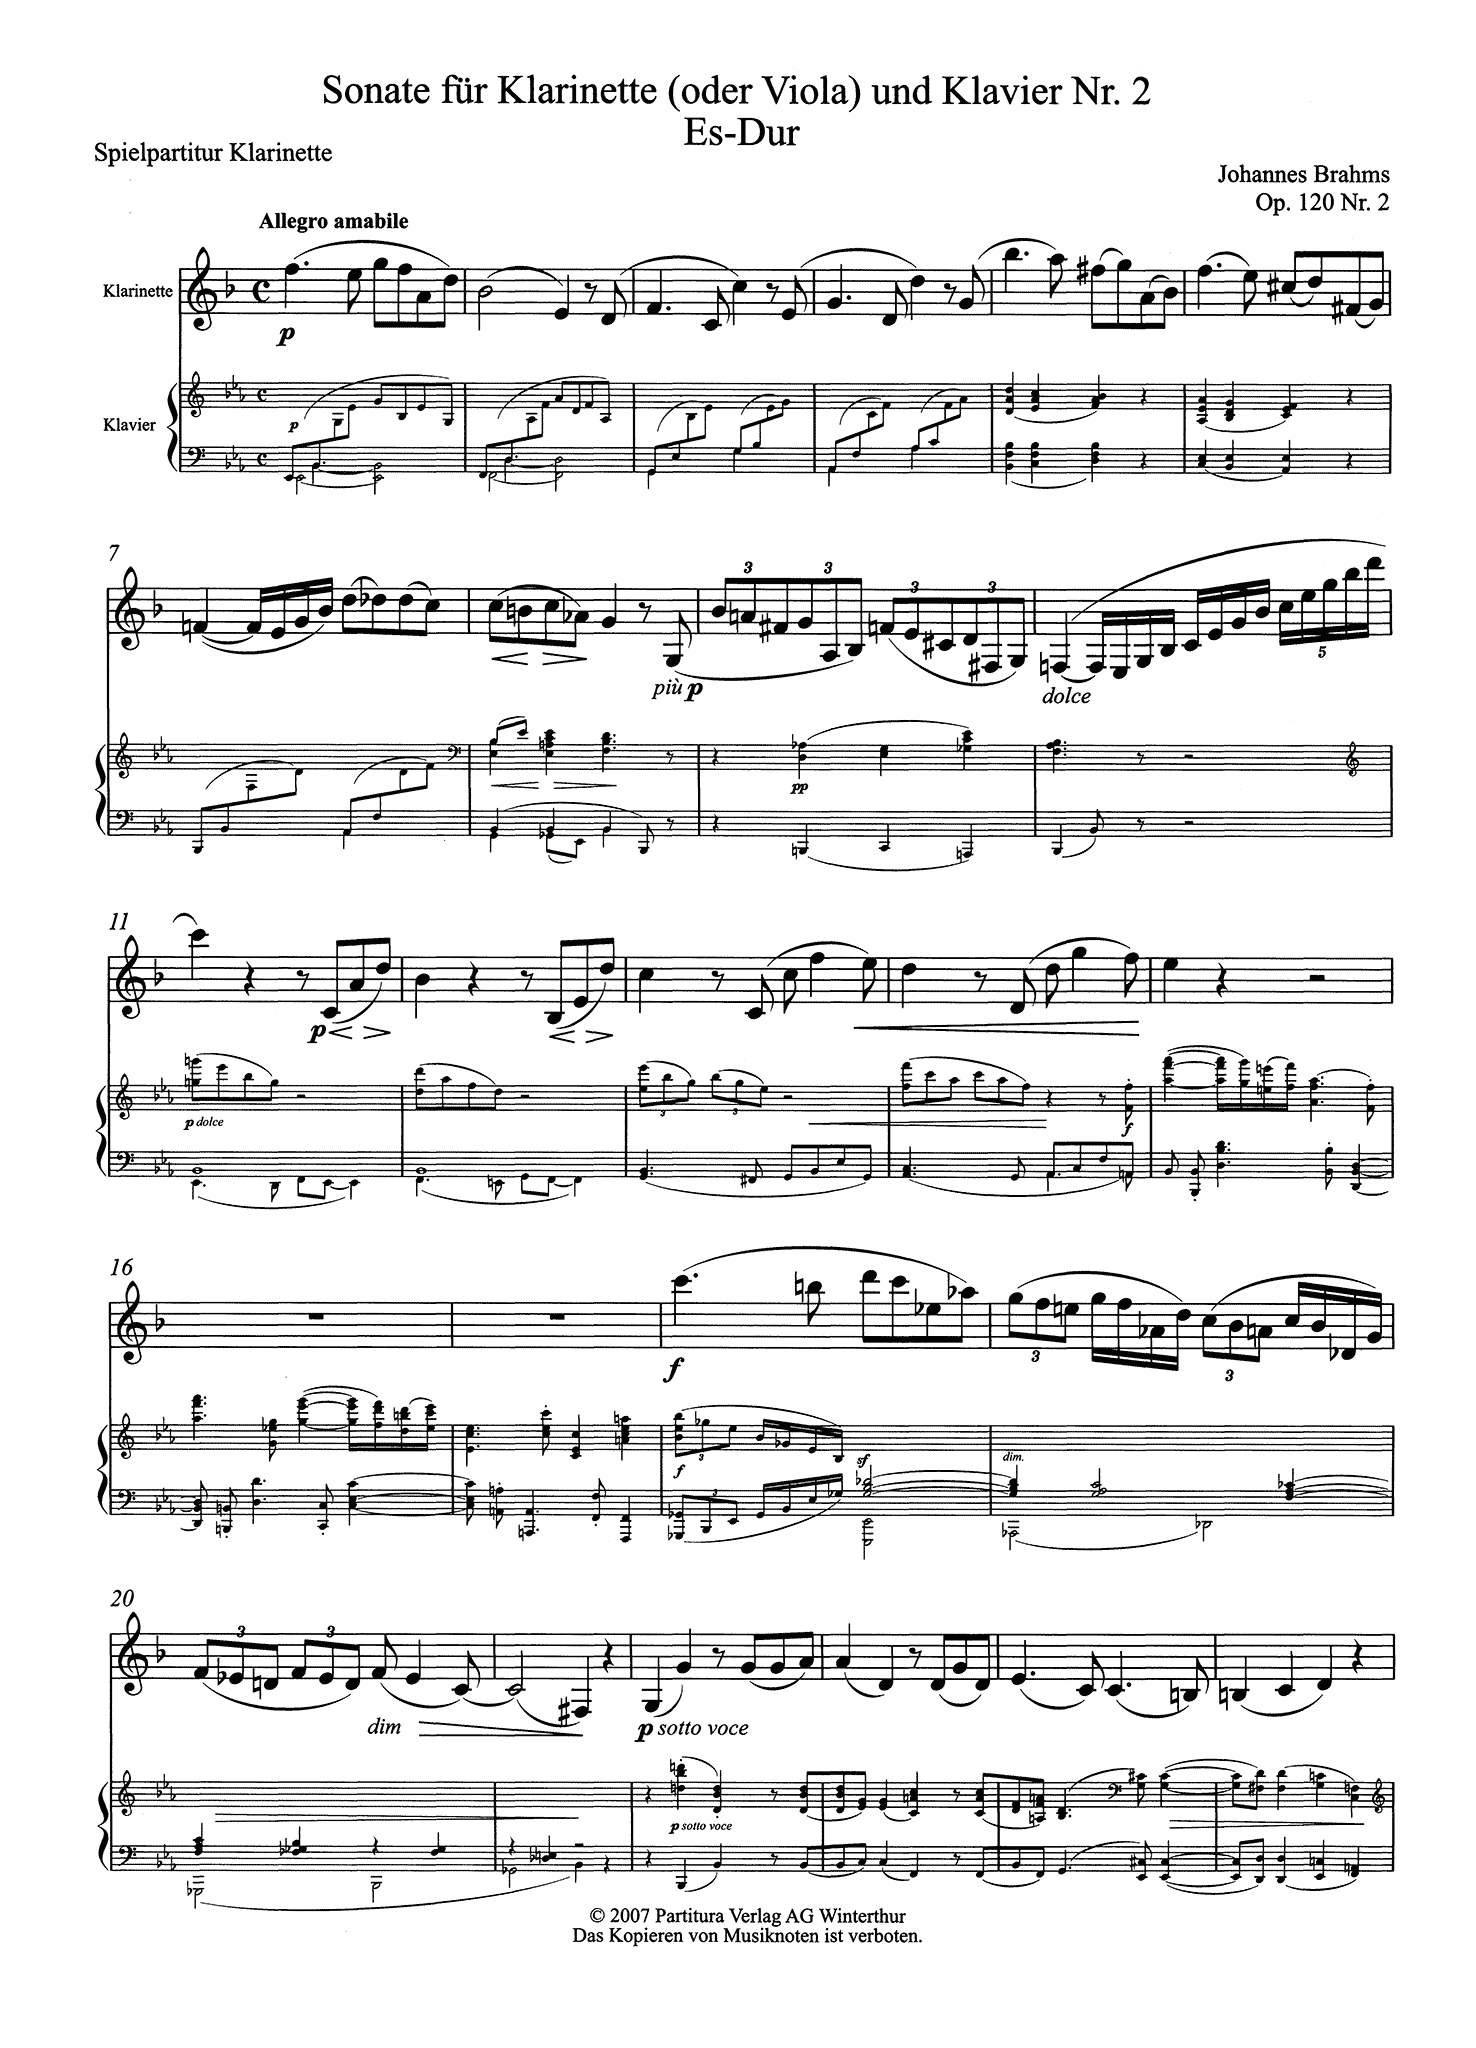 Sonata in E-flat Major, Op. 120 No. 2 Clarinet Score